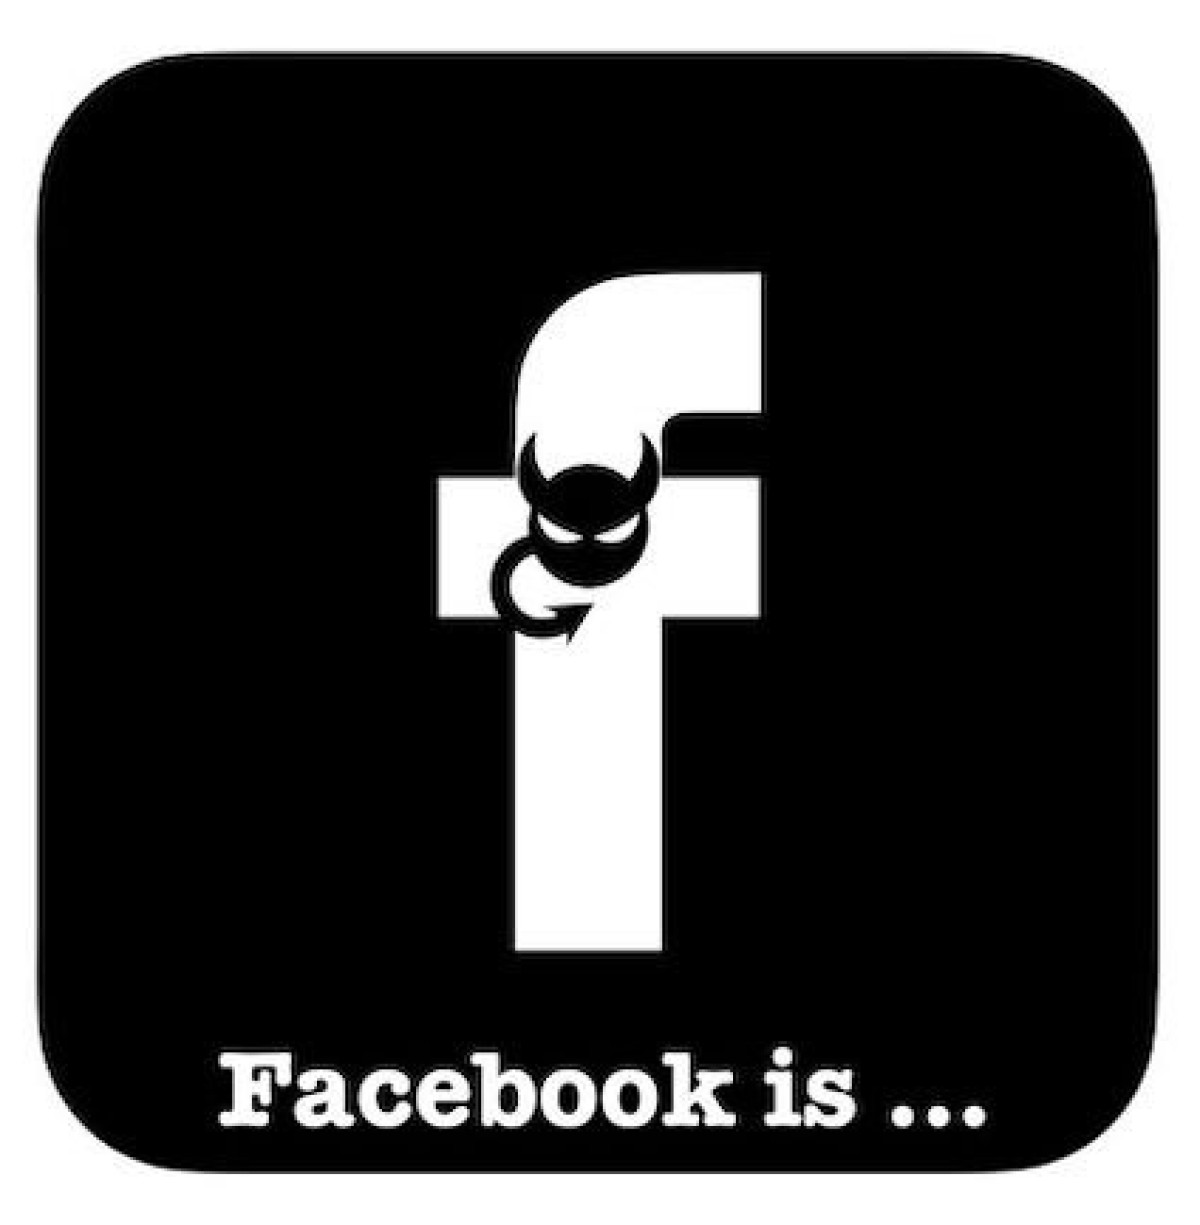 Facebook is ...